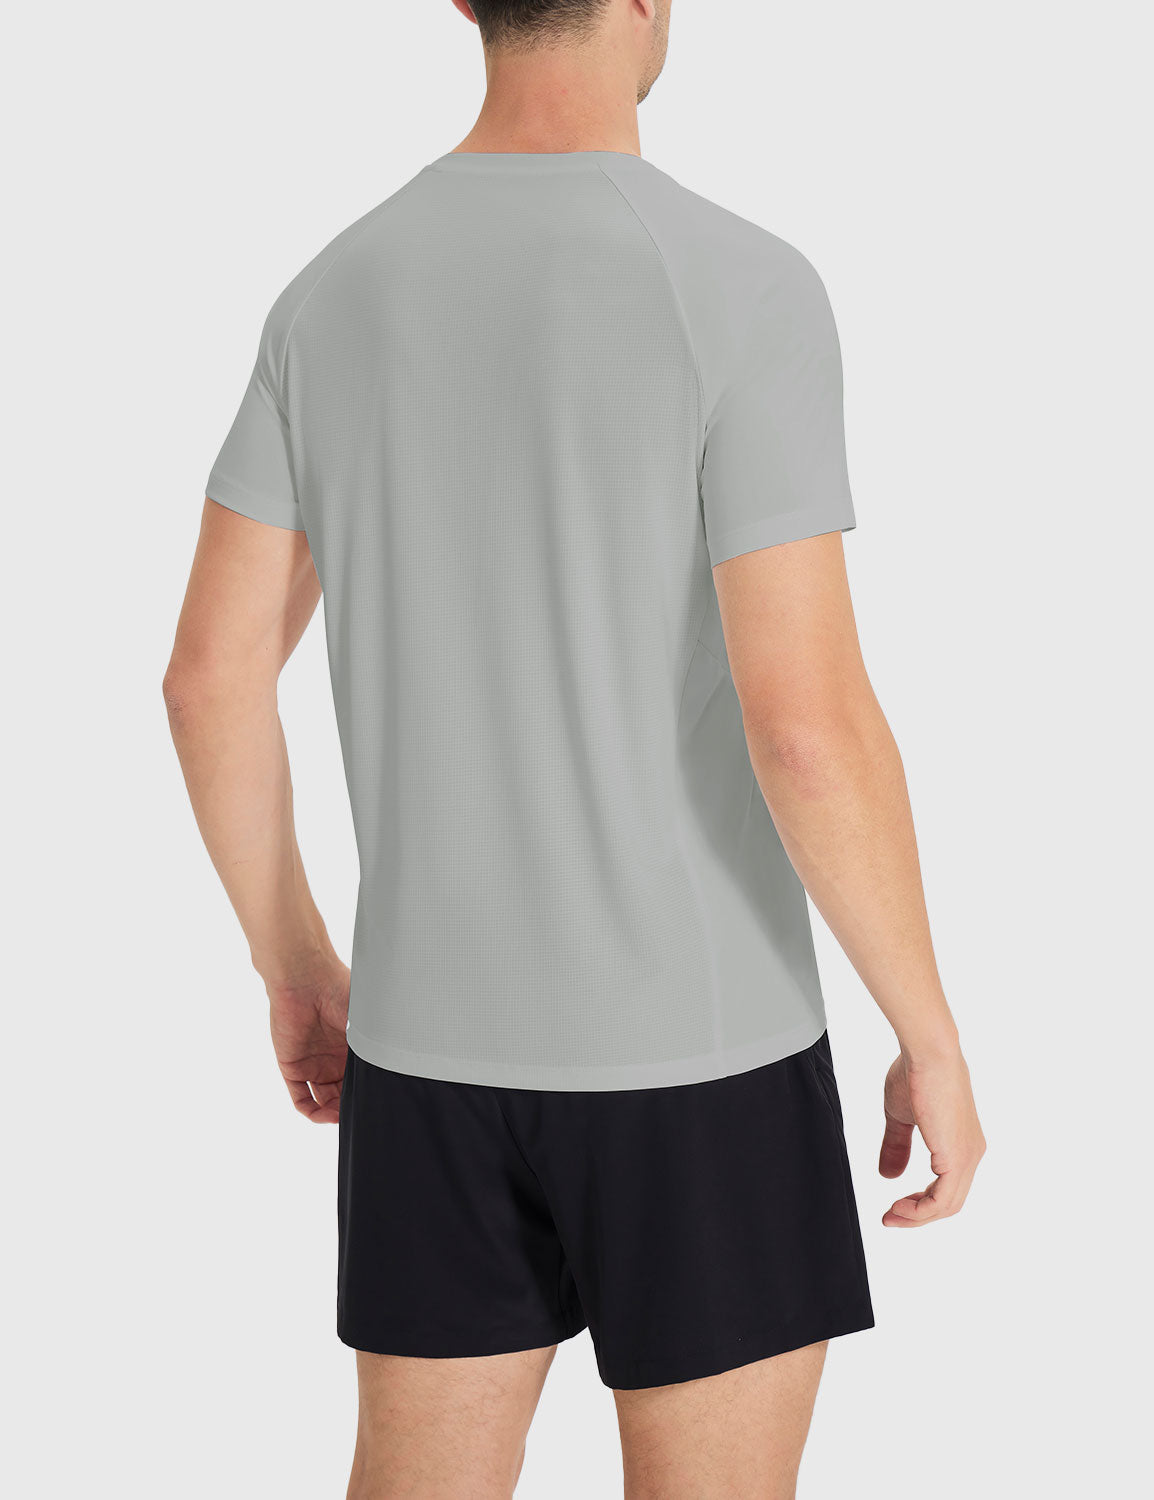 Baleaf Men's Quick Dry UPF 50+ Athletic T-shirts Silver Sconce Back